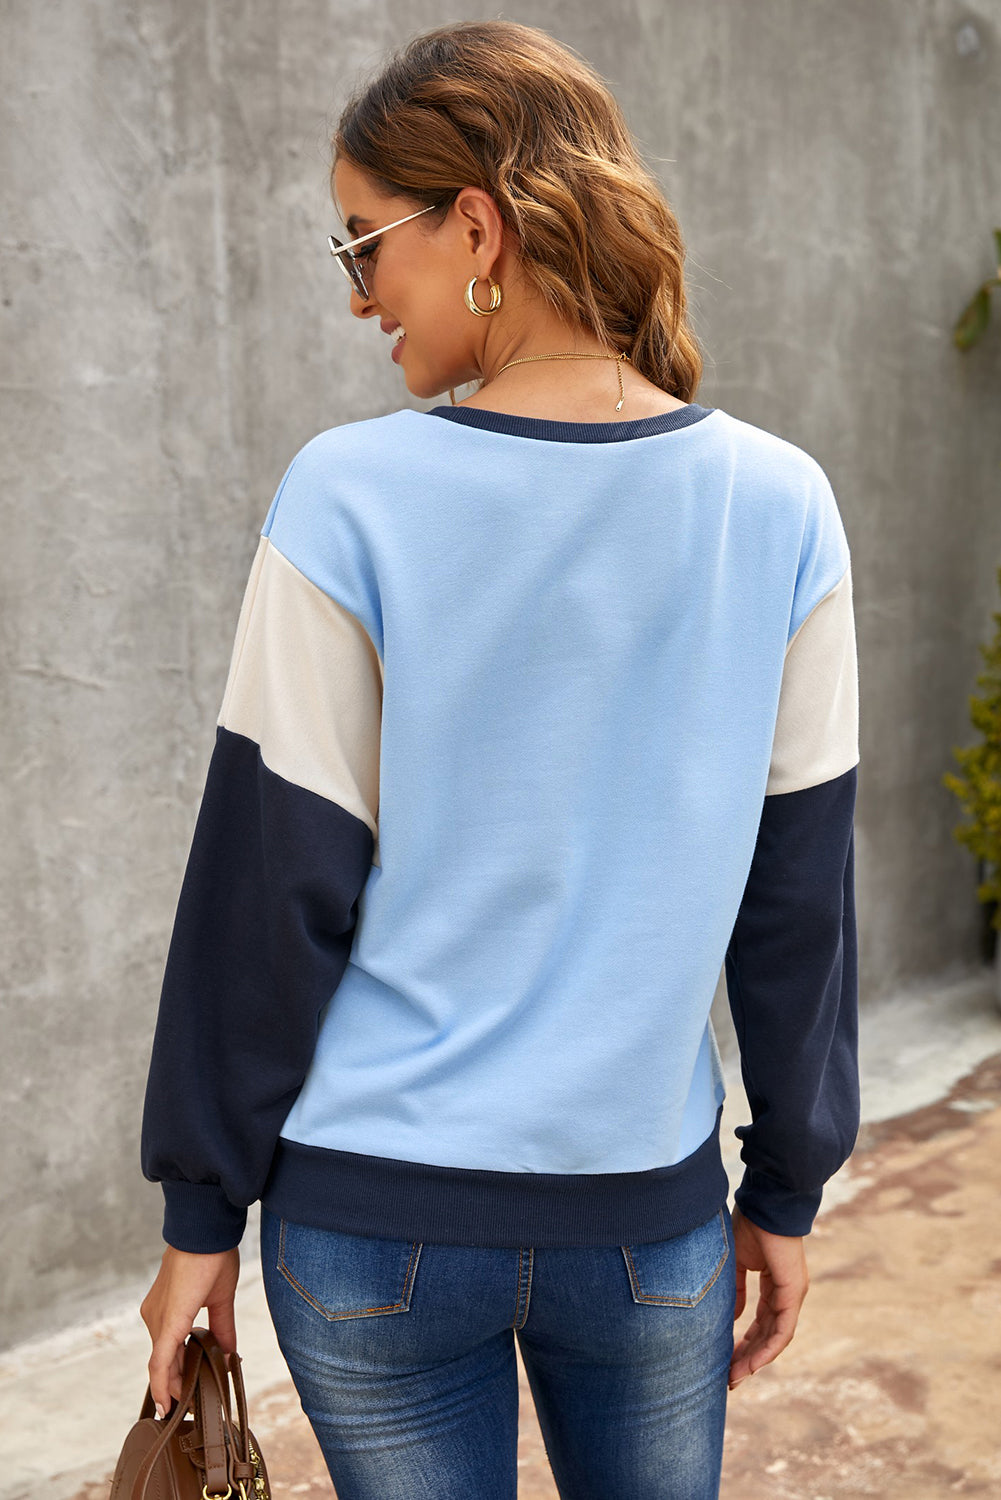 Cali Chic Women's Sweatshirt Celebrity Sky Blue Color Block Pullover Sweatshirt